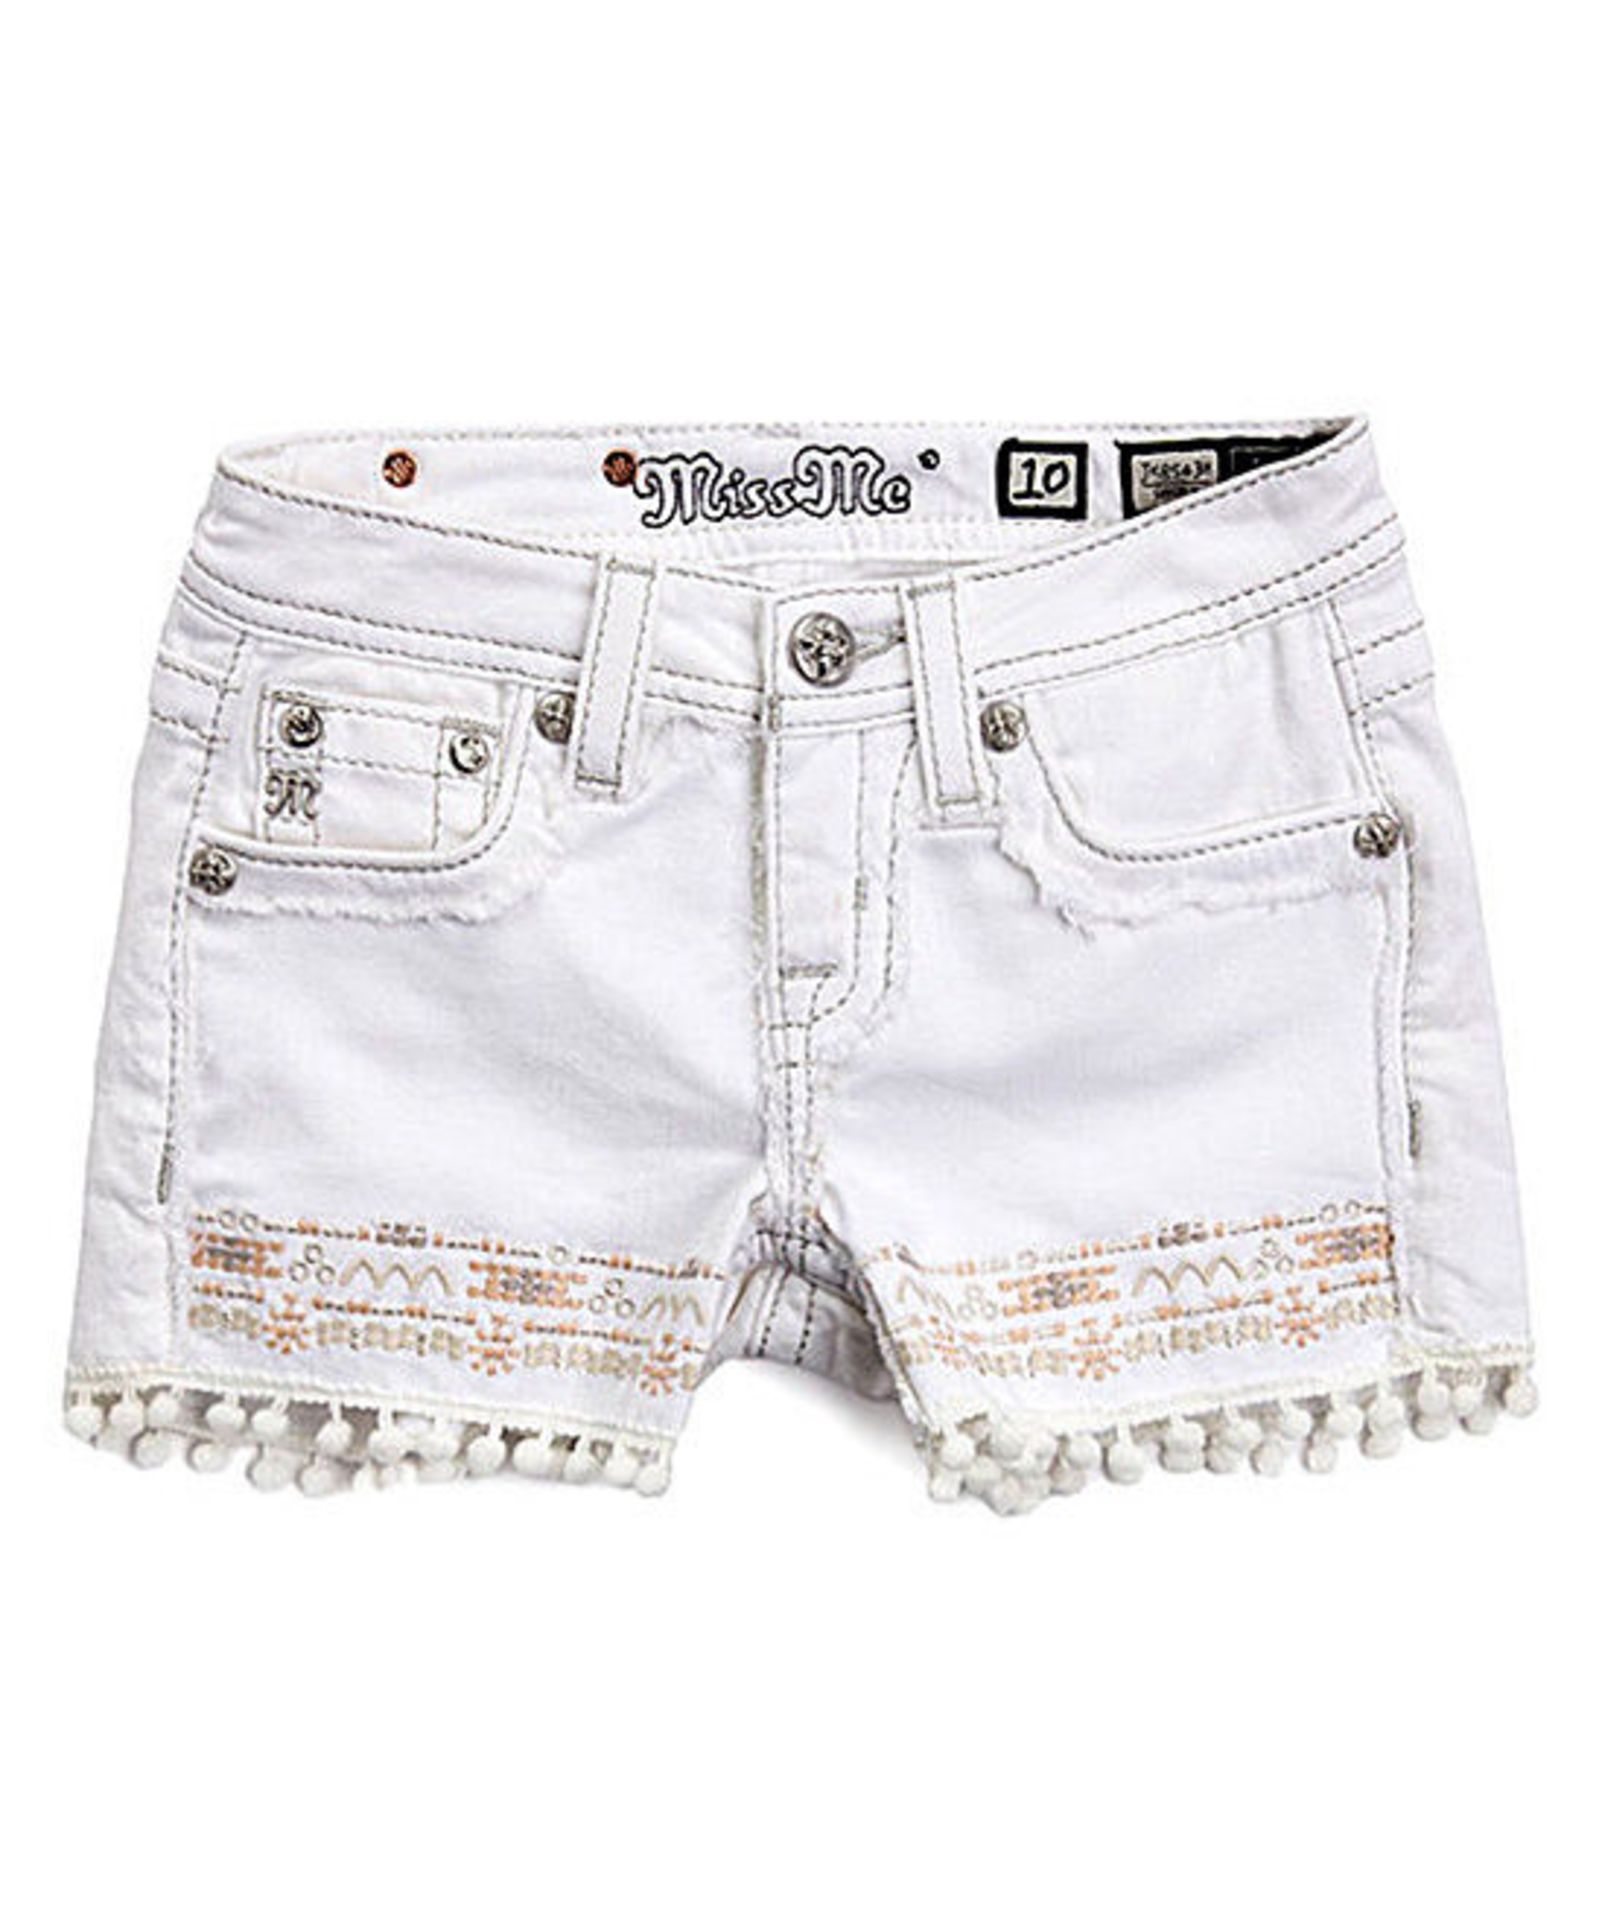 White Geometric Pom-Pom Denim Shorts (Age 14 yrs) (New with tags) [Ref: 39351601- T-31]